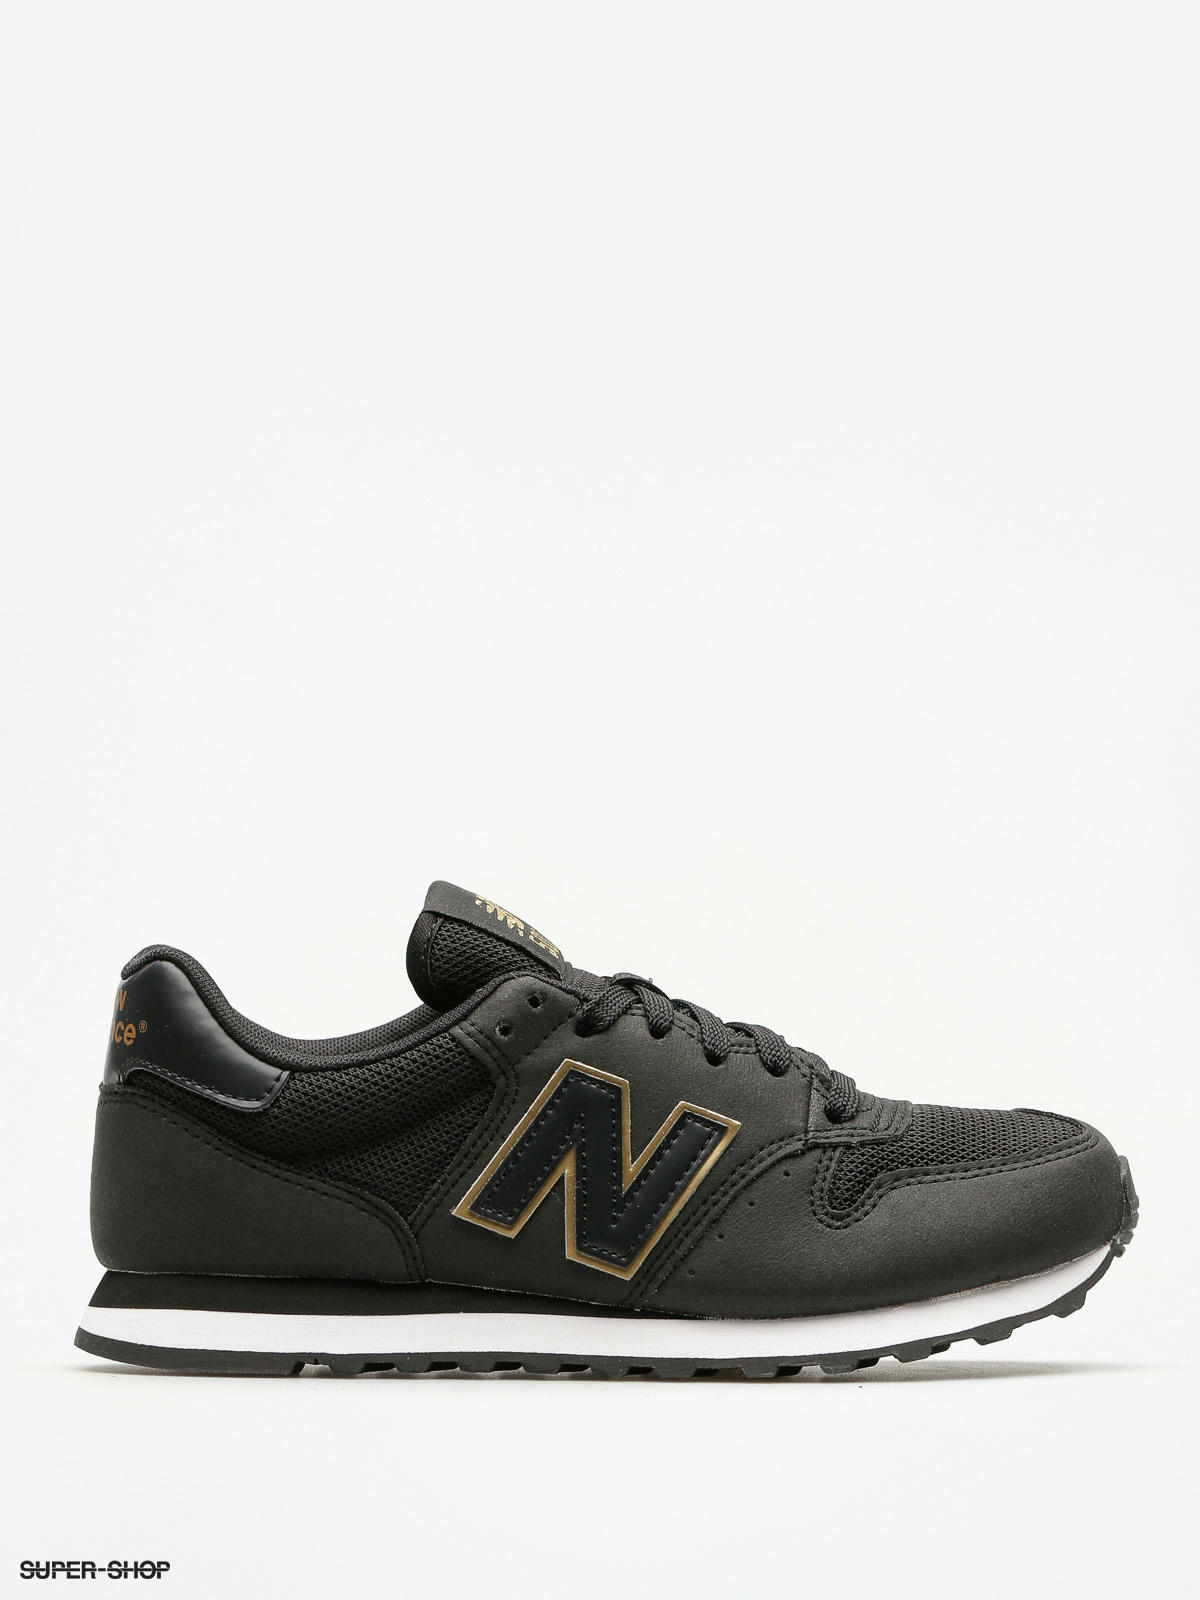 New Balance Shoes 500 Wmn (black/gold)